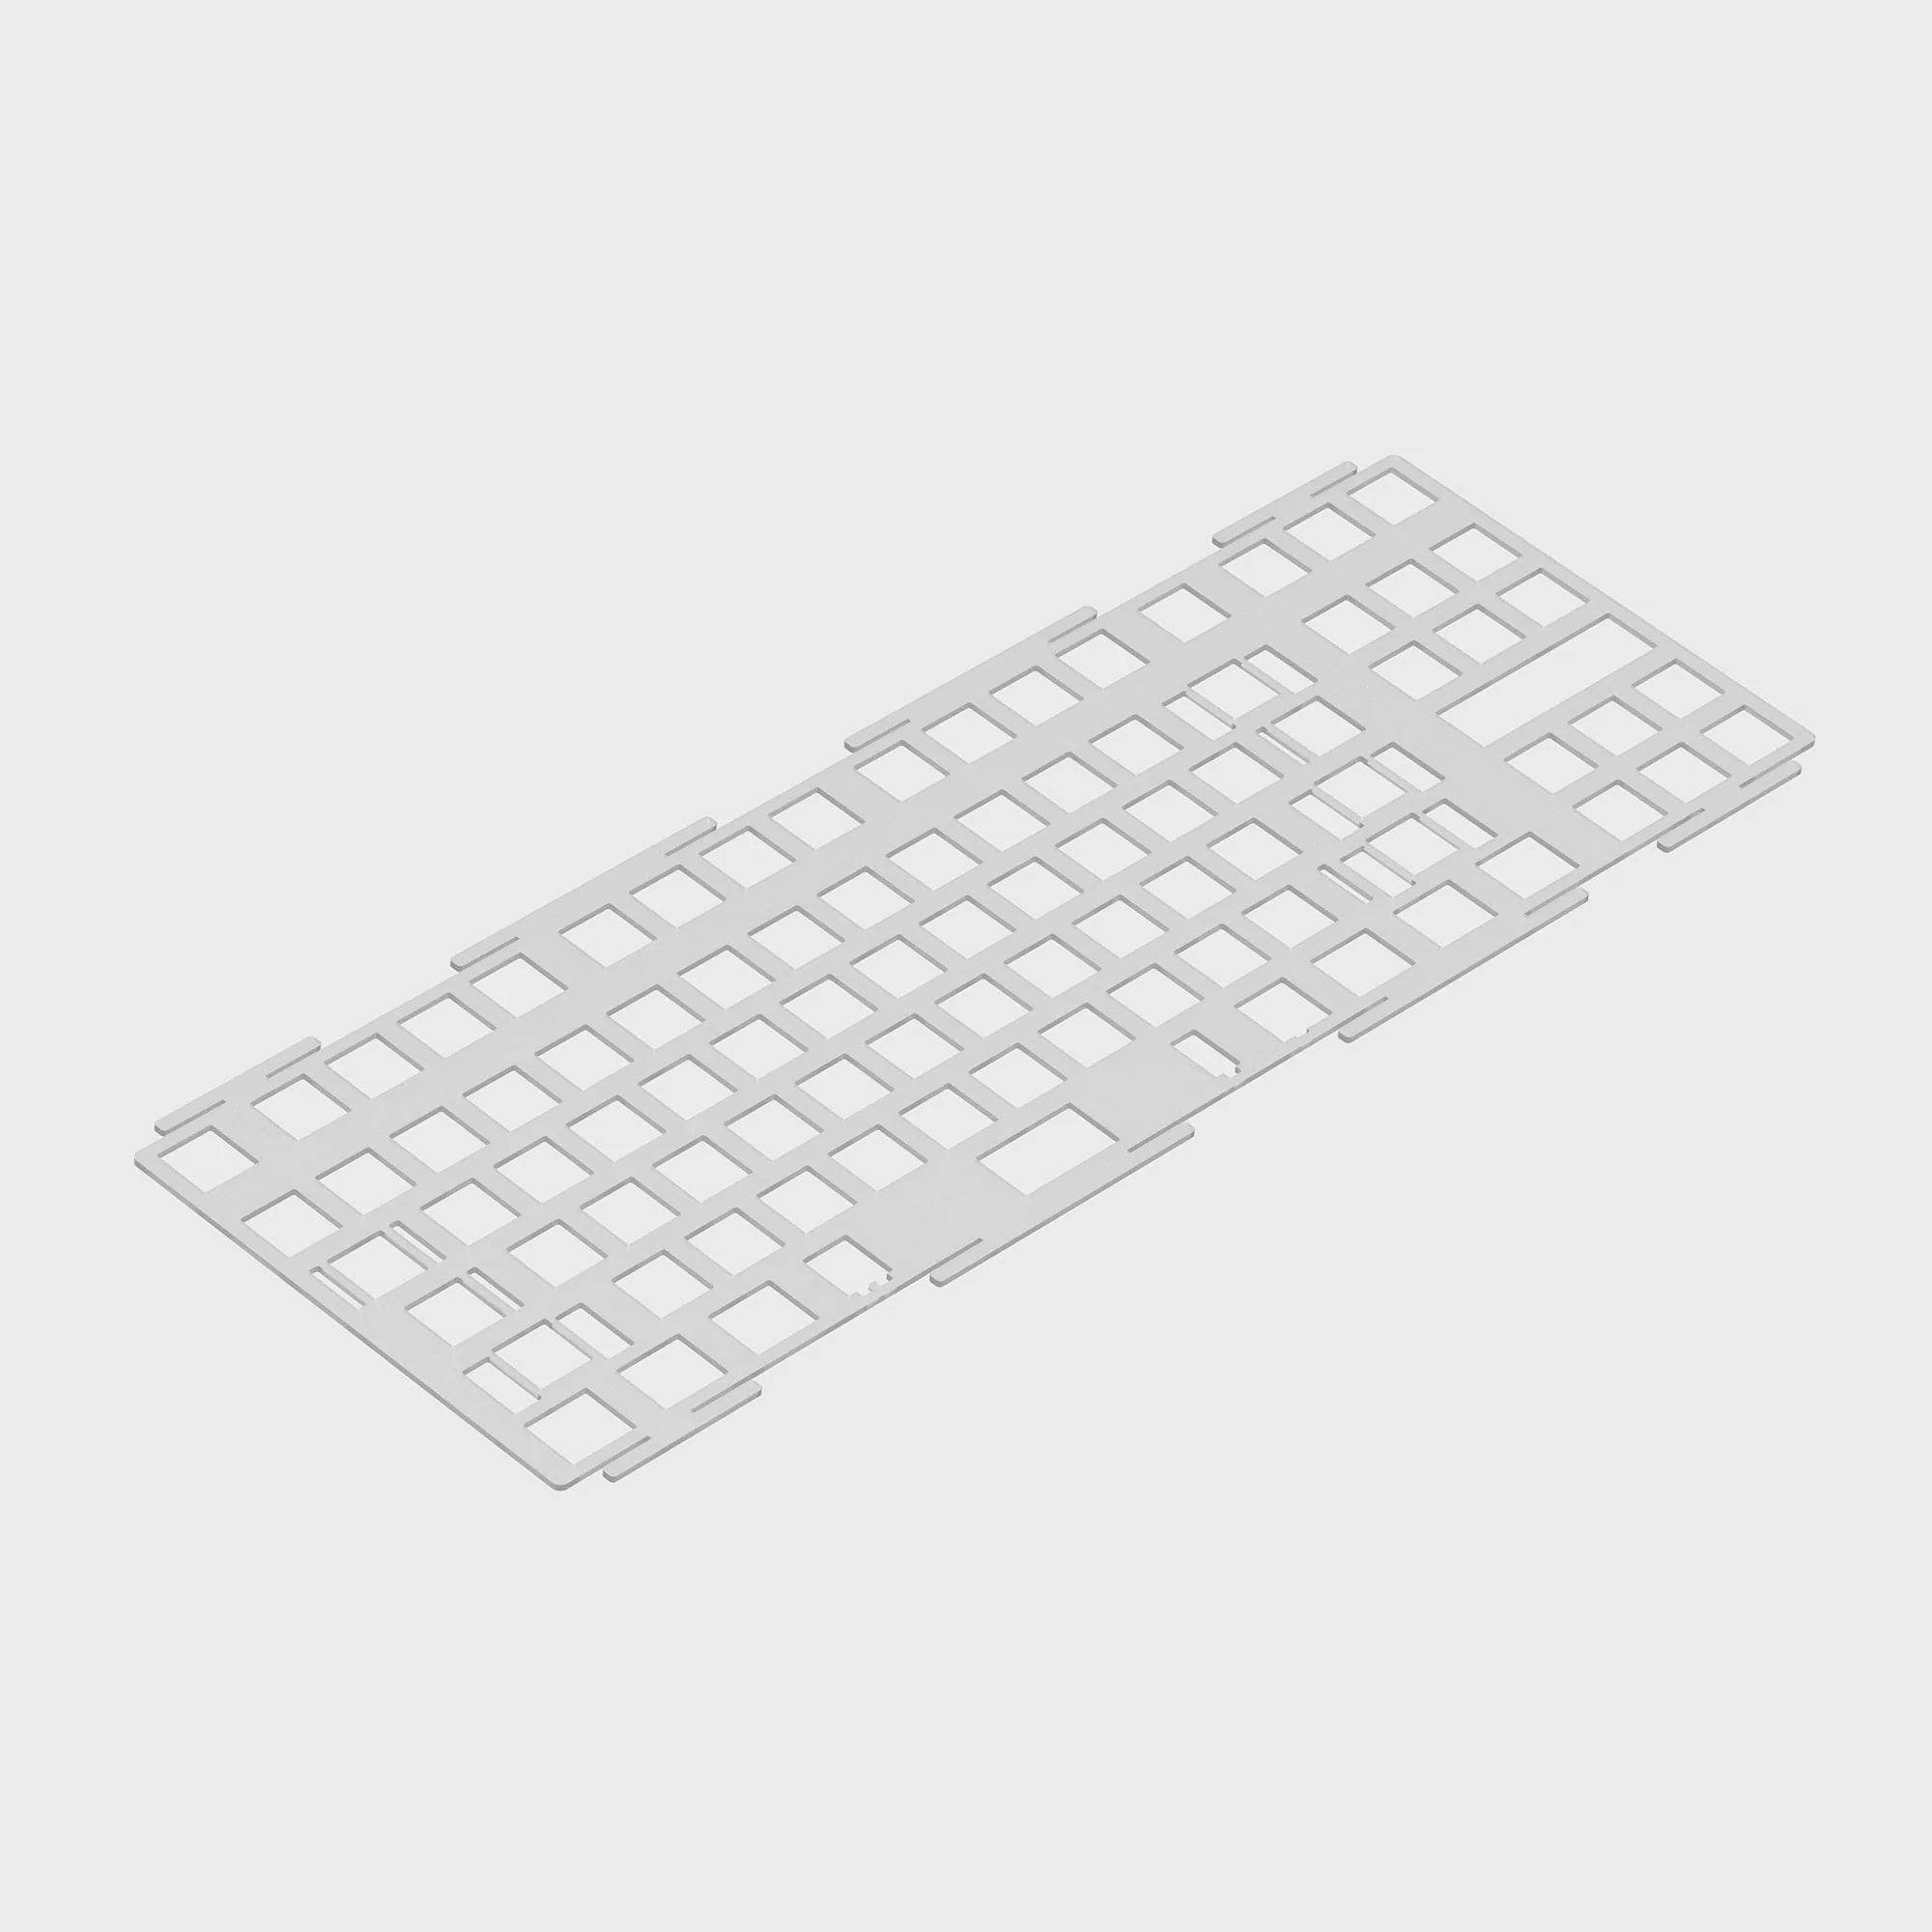 Tiger 80 Keyboard Accessories